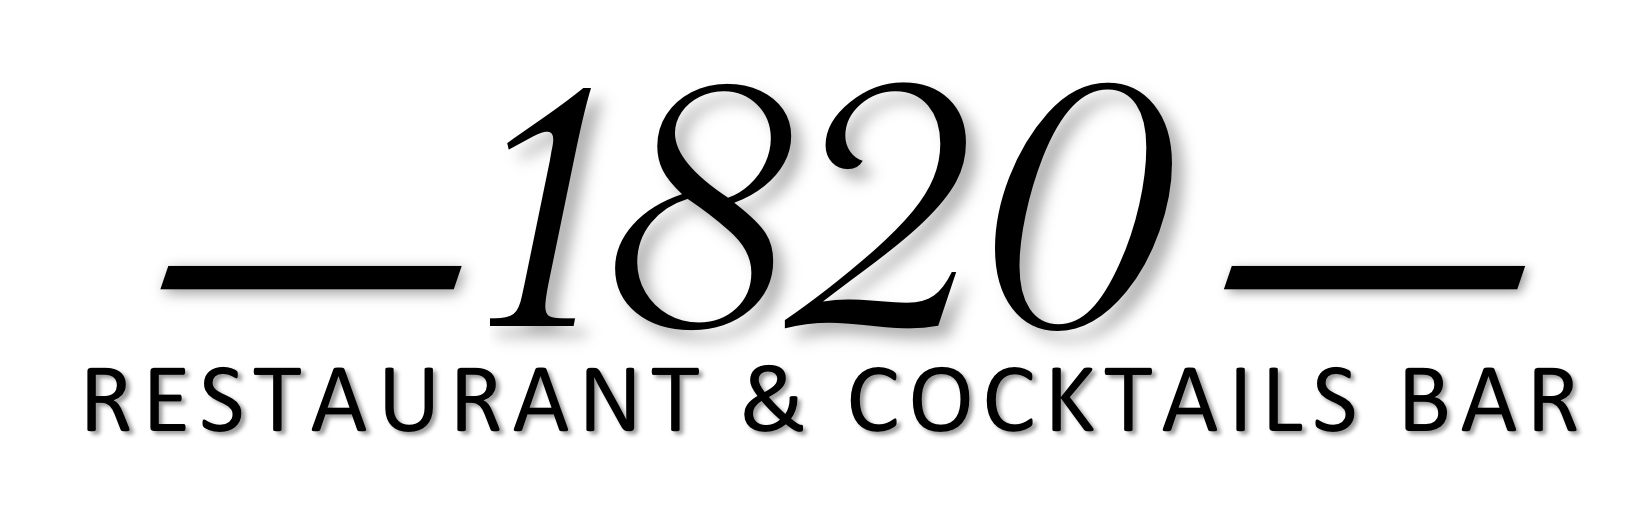 1820 Restaurant & Cocktails Bar